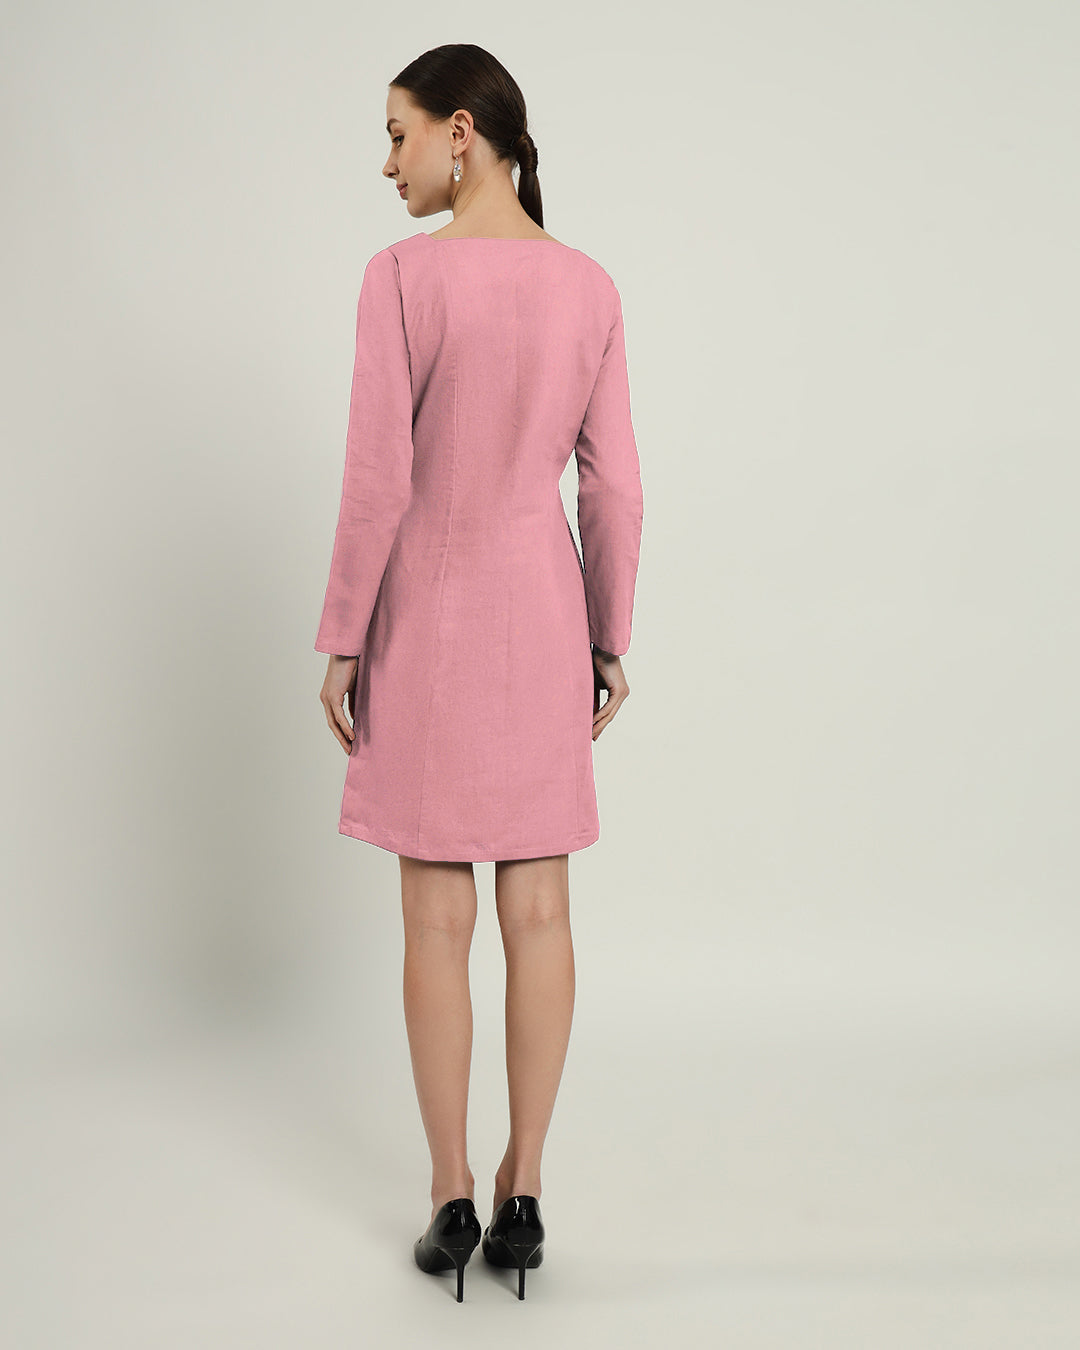 The Auburn Fondant Pink Dress